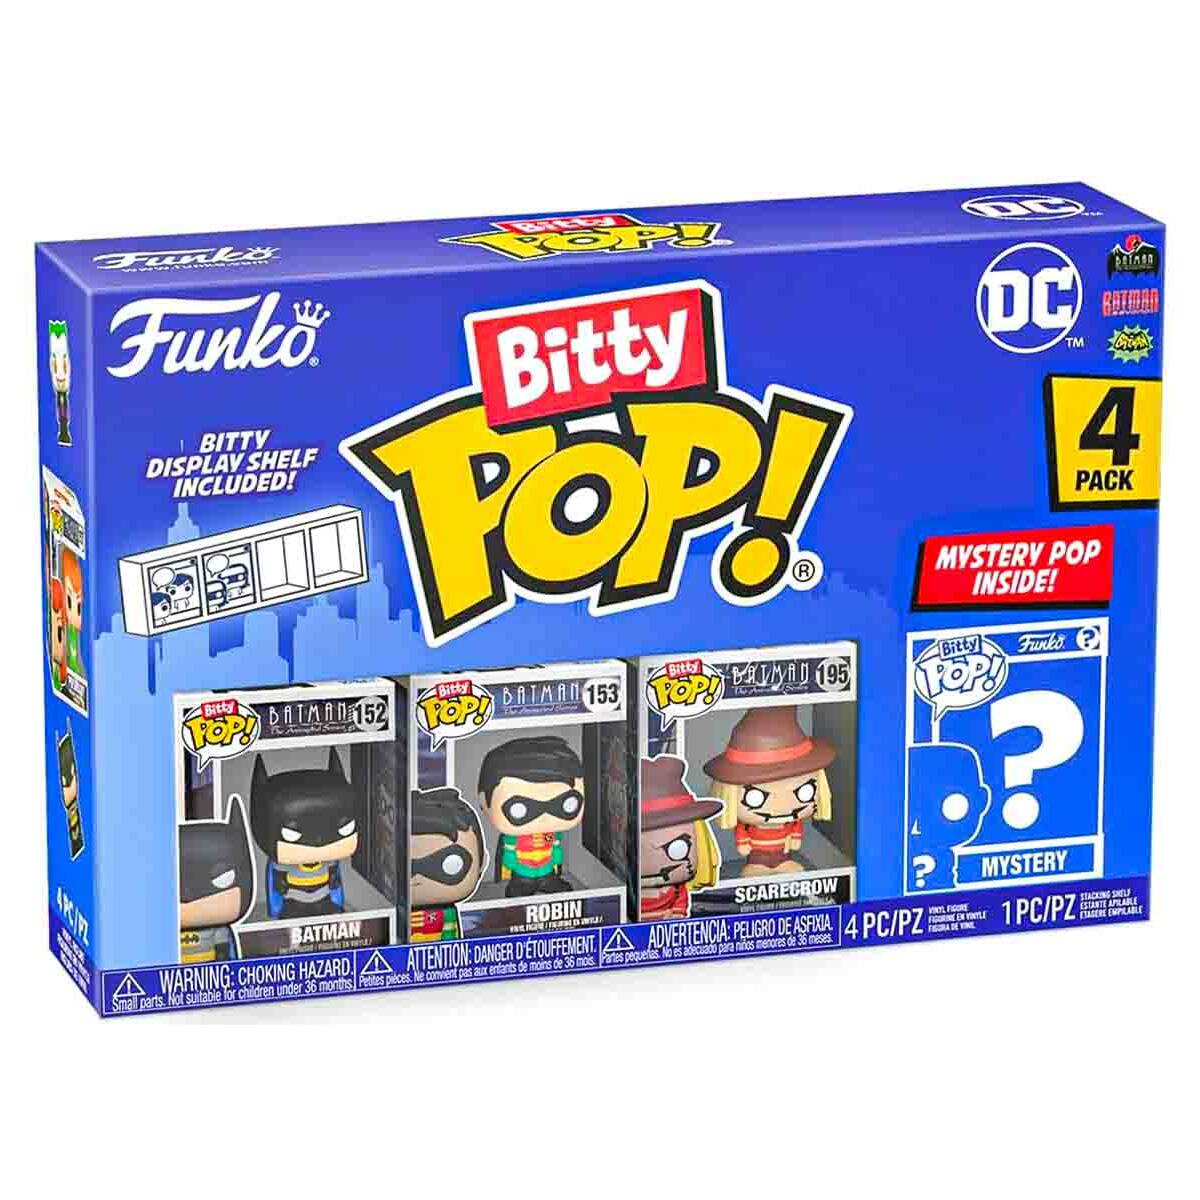 Funko Bitty Pop!: DC - The Joker 4-Pack